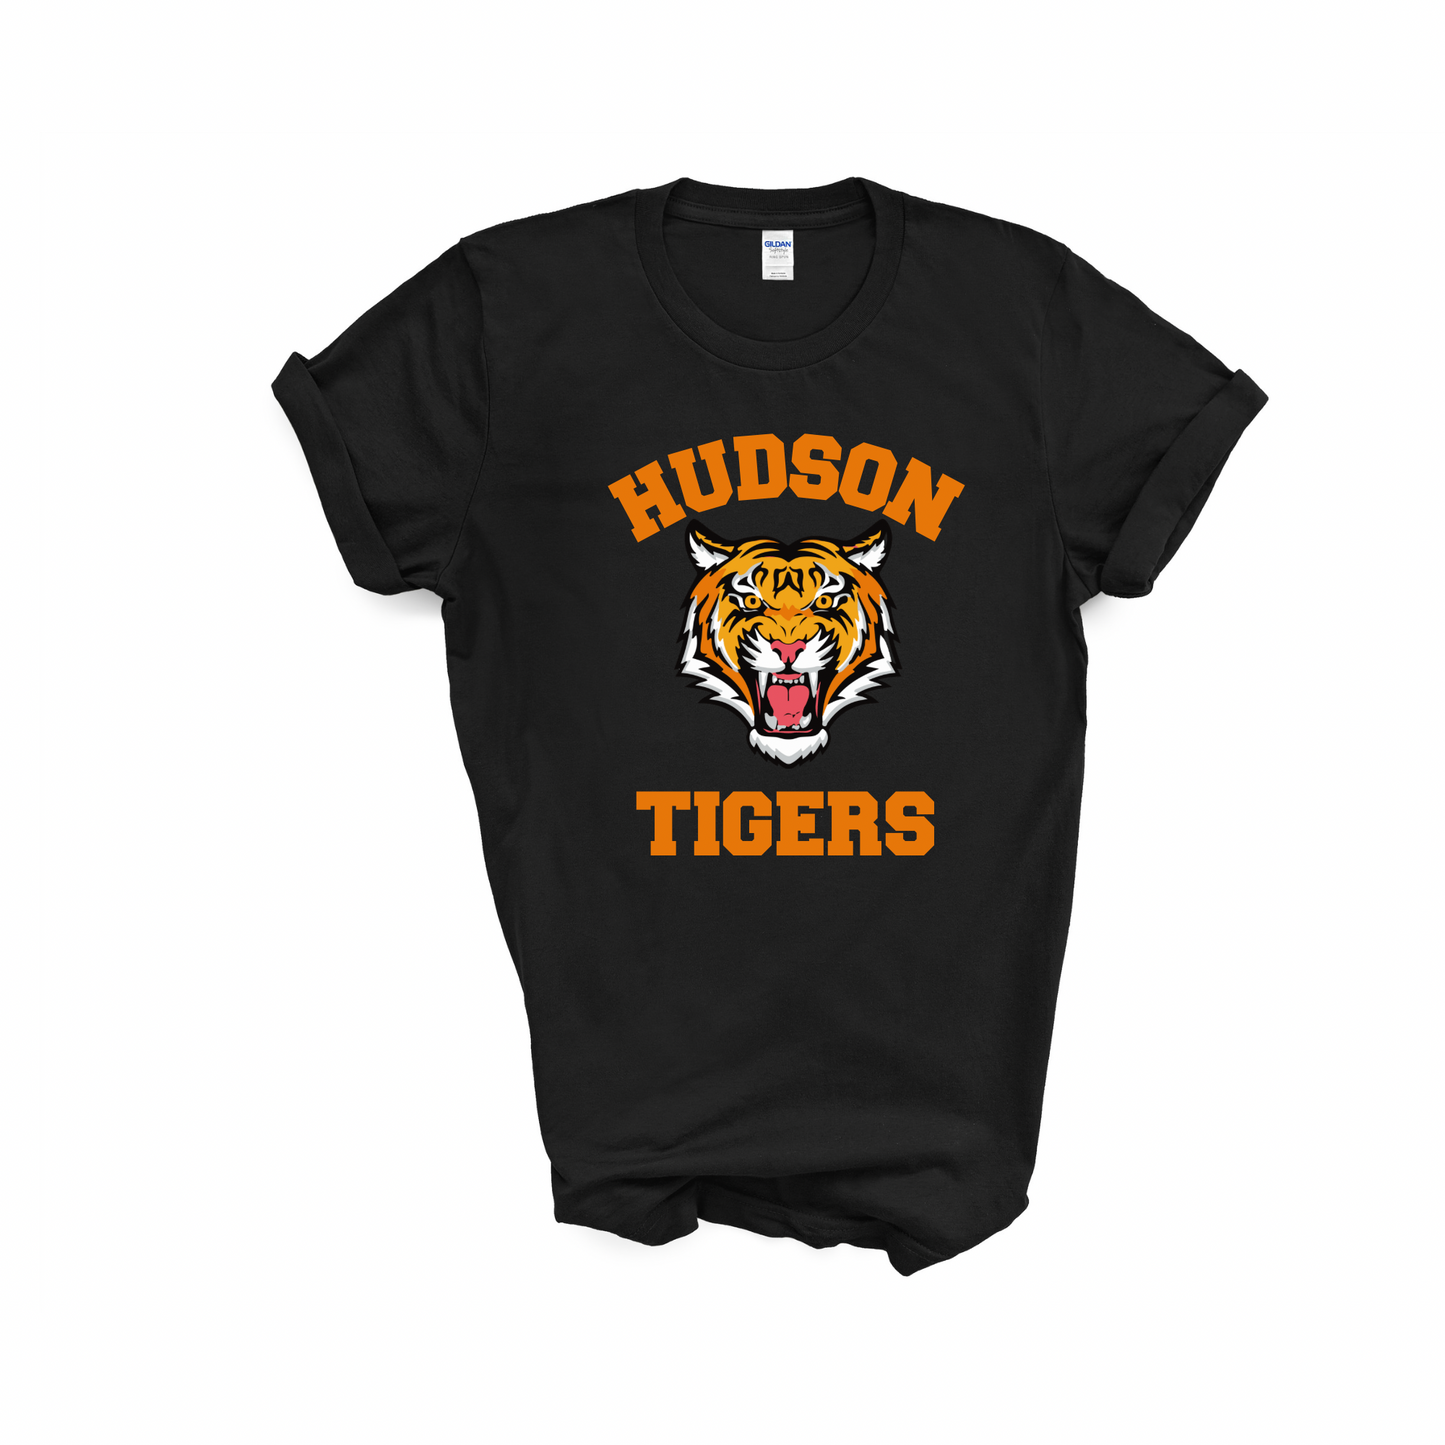 Hudson Tigers T-Shirt